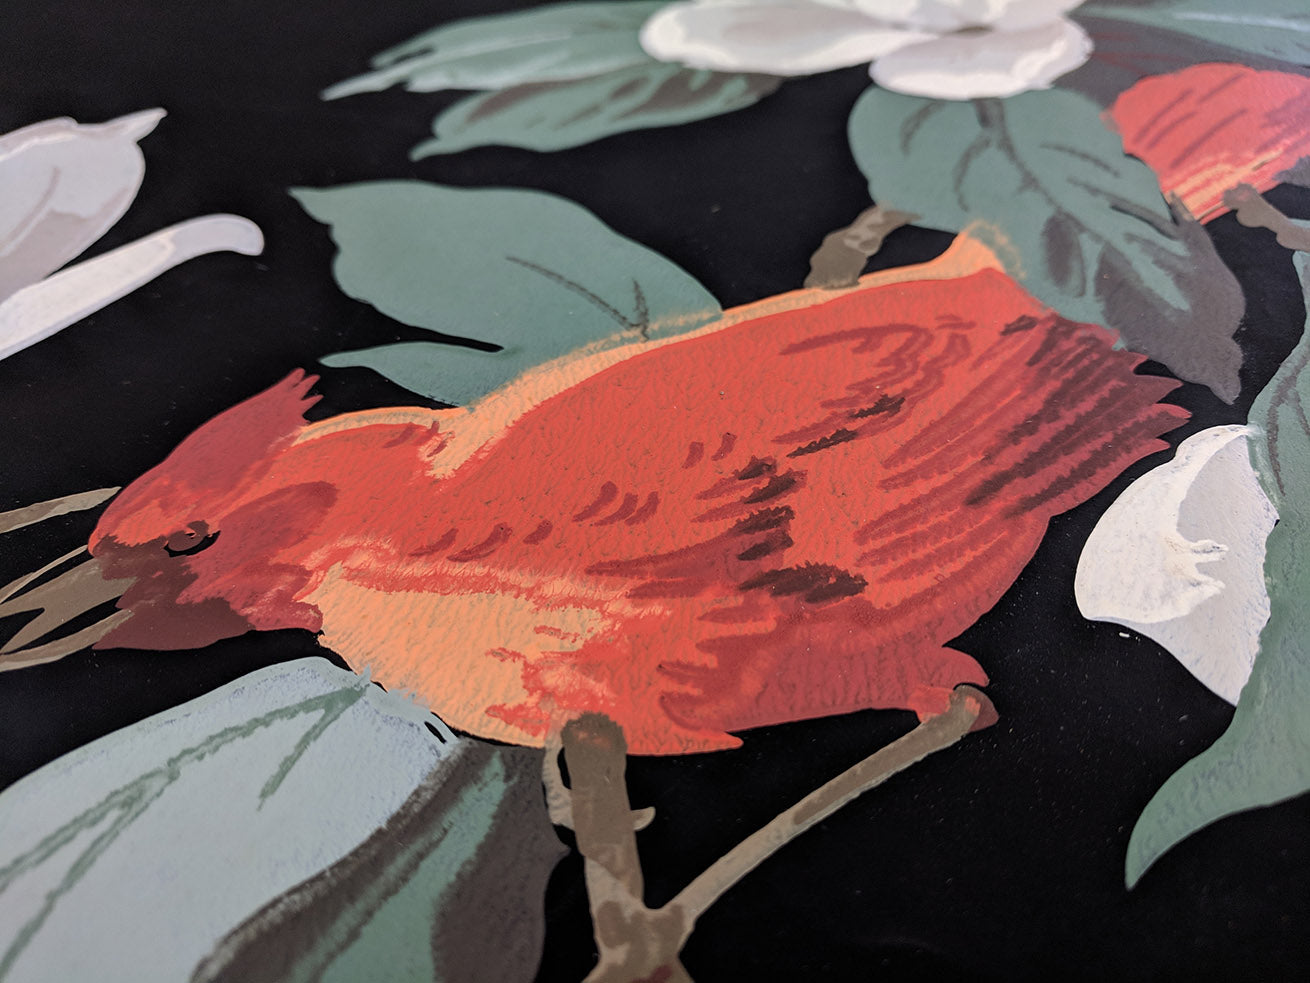 "Normandie" Cardinal in Flowering Branches - Vintage Wallpaper Remnant